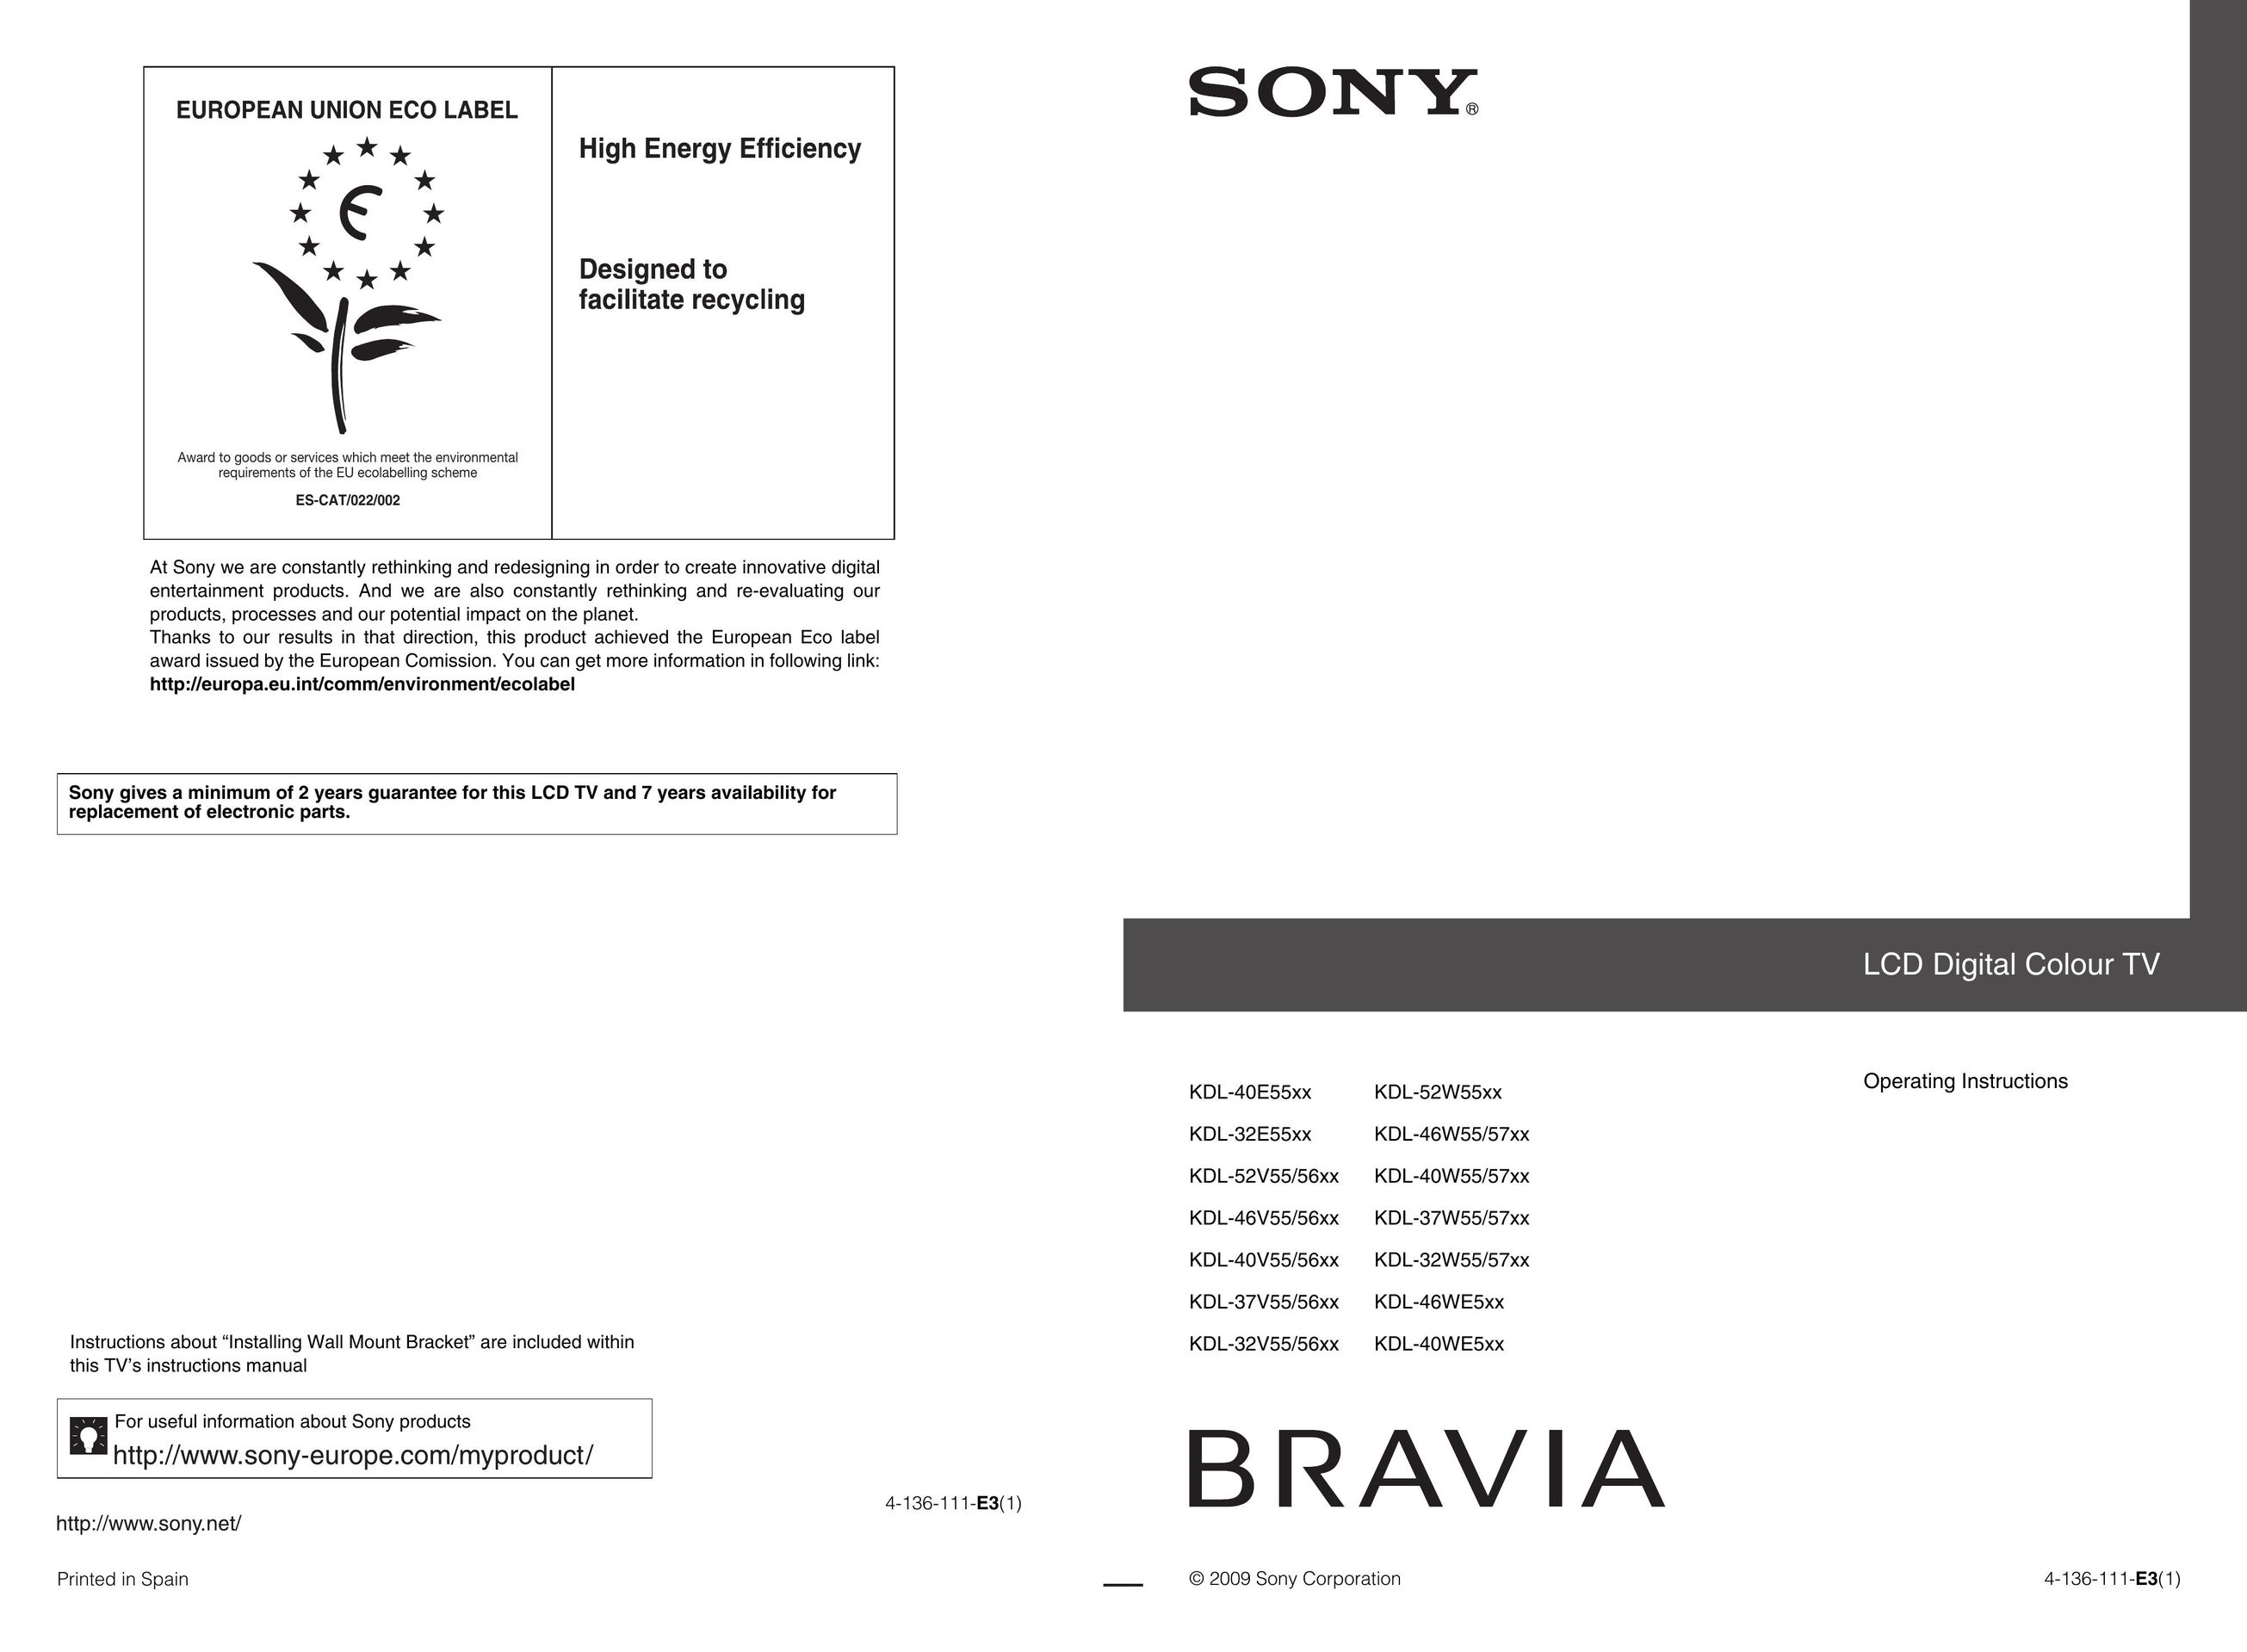 Sony 4-136-111-E3(1) Flat Panel Television User Manual